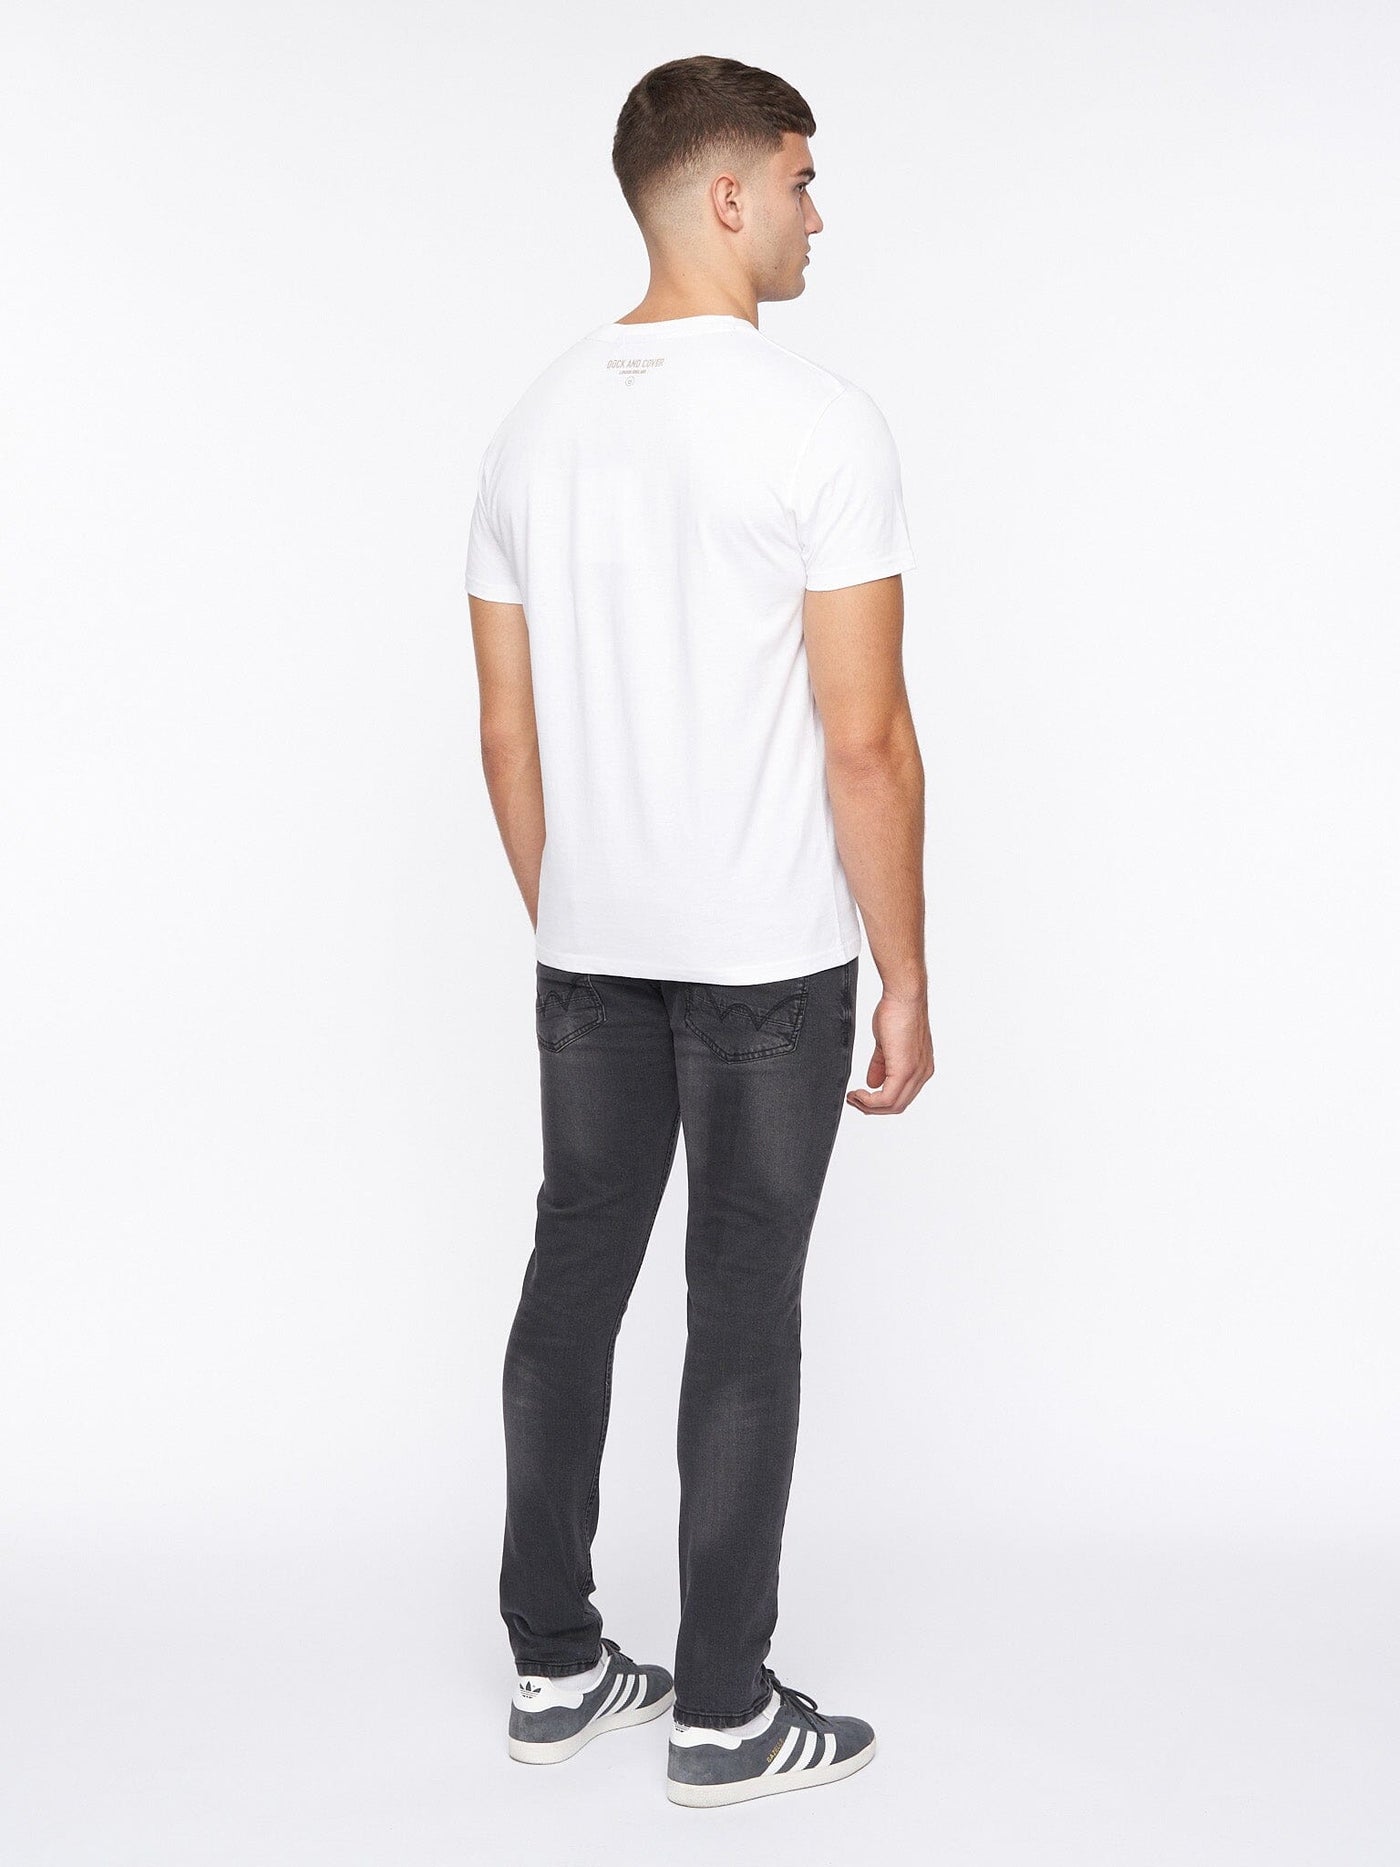 Bardell T-Shirt White